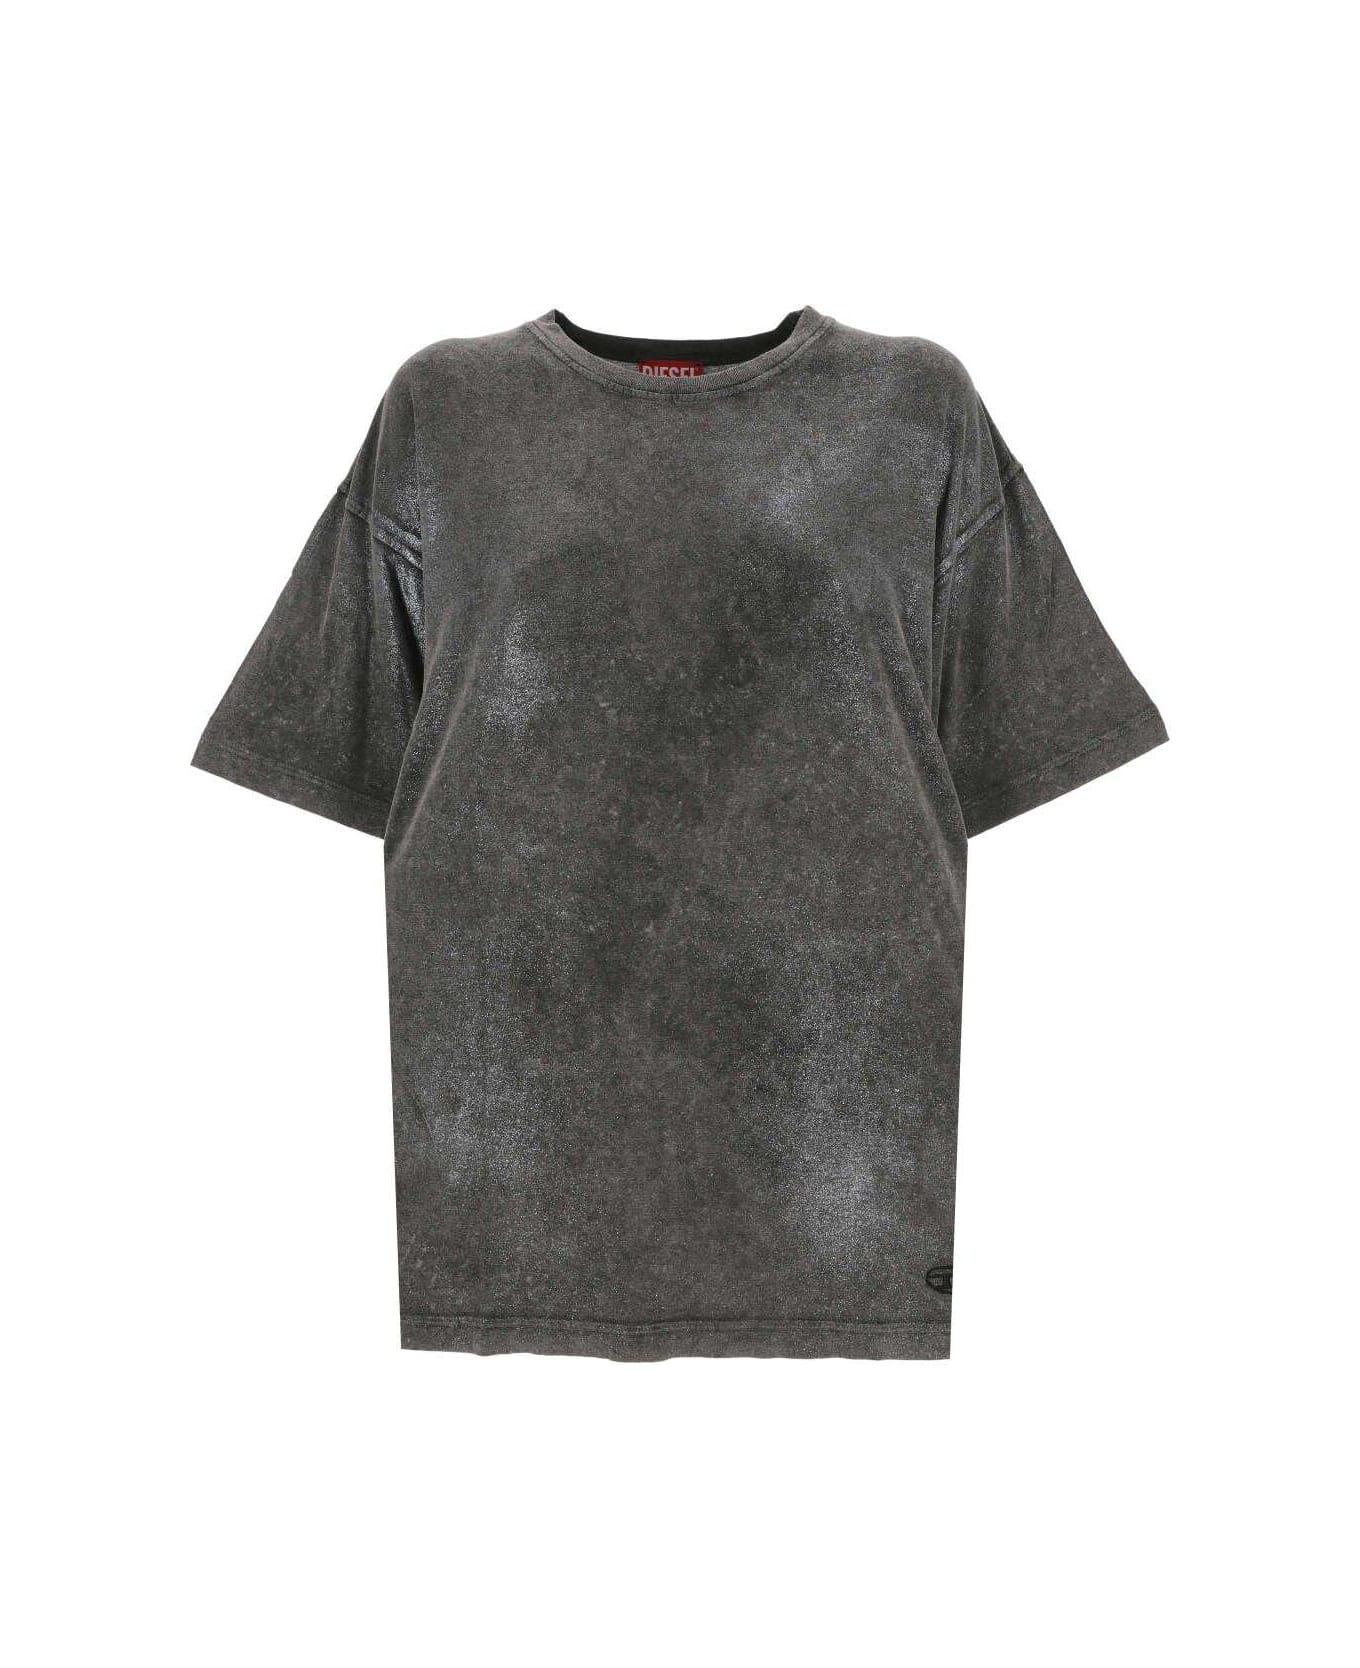 Diesel T-buxt Faded Metallic T-shirt - Non definito Tシャツ